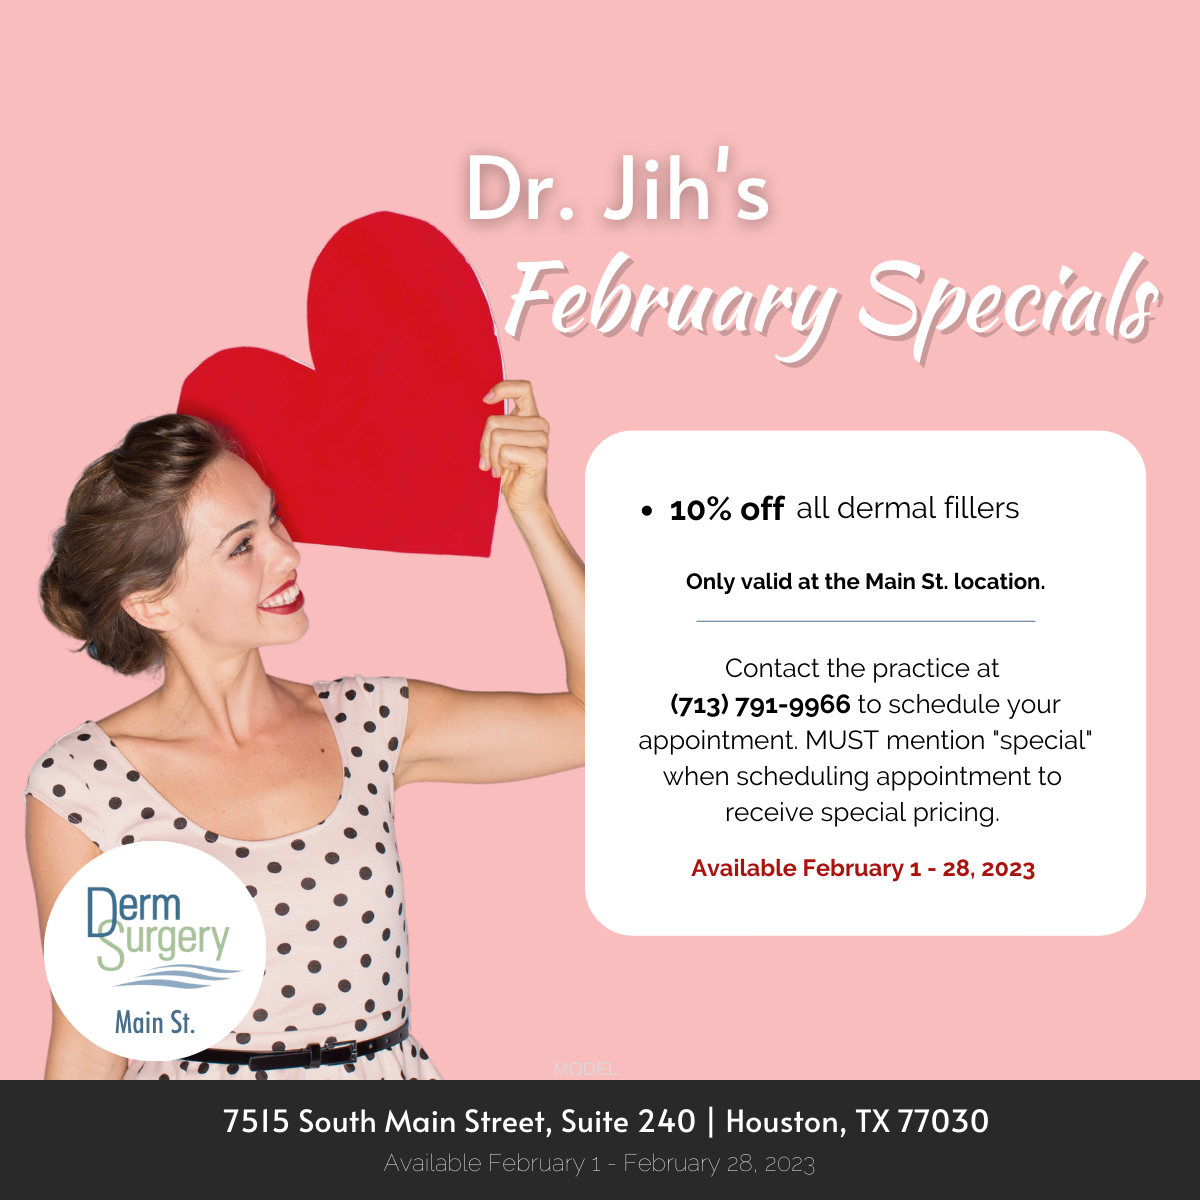 Dr. Jih's February Specials 2023